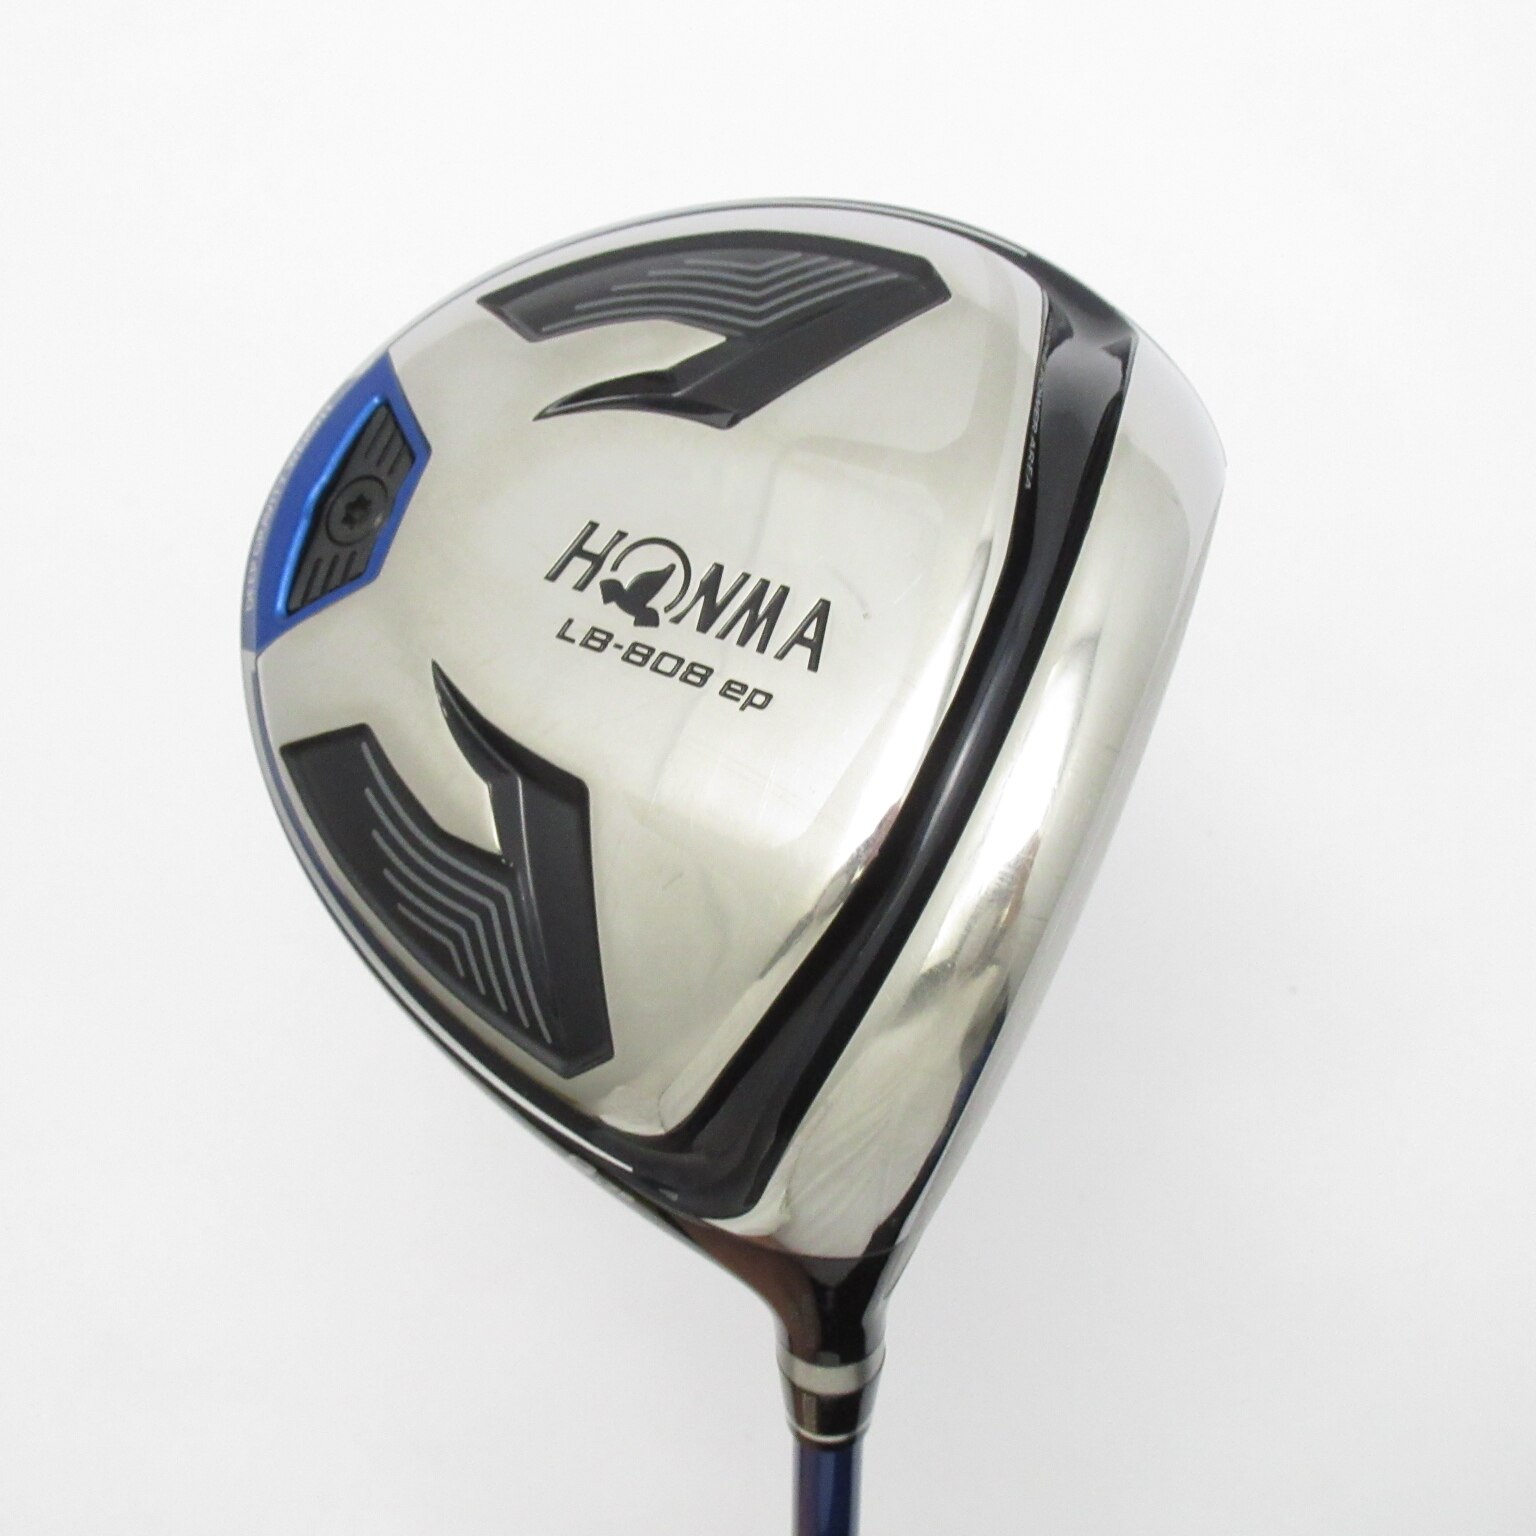 HONMA GOLF LB-808 ep ホンマ ゴルフ ドライバー-